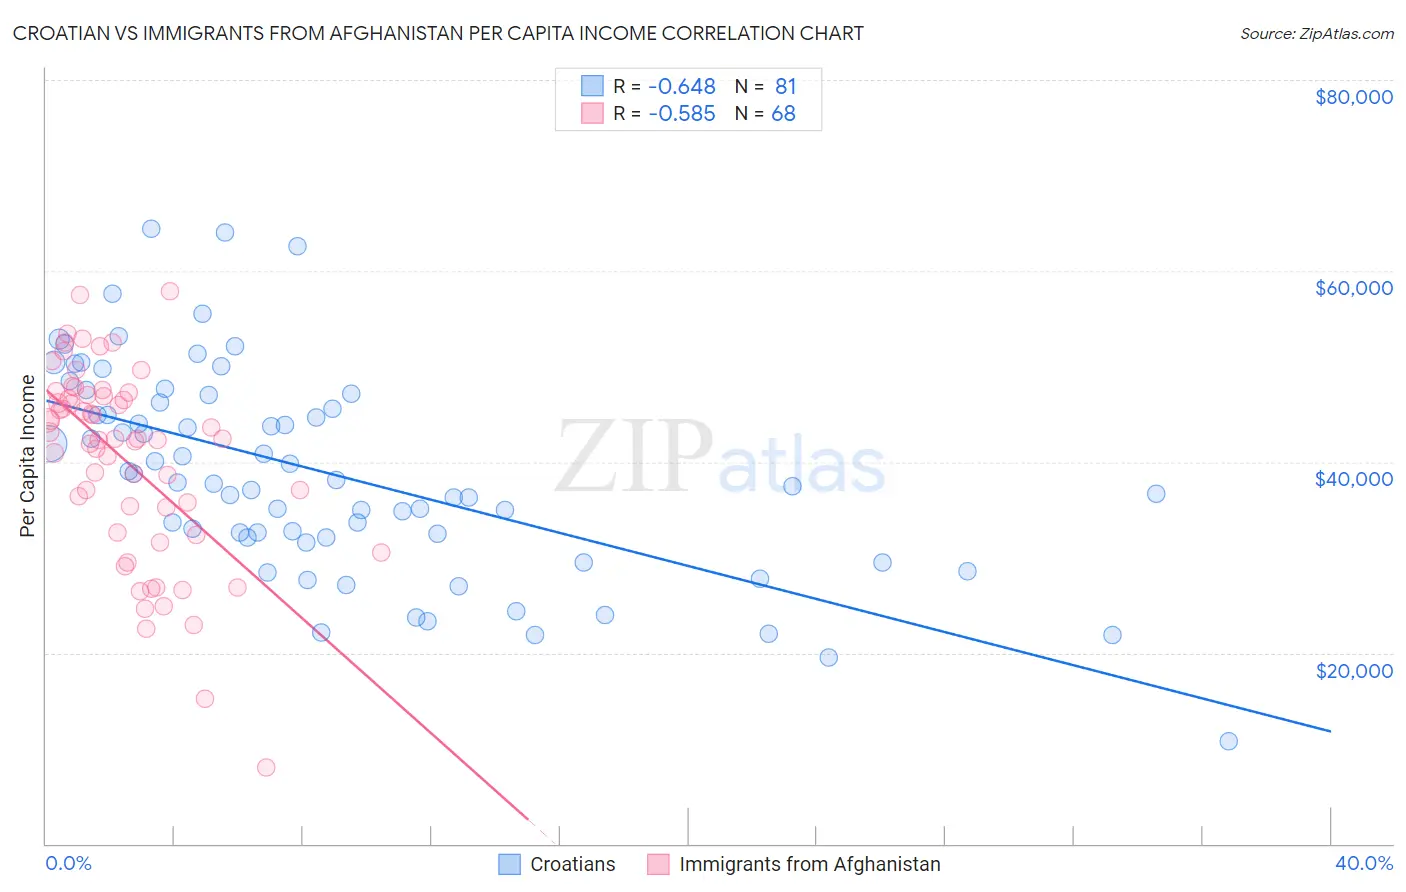 Croatian vs Immigrants from Afghanistan Per Capita Income